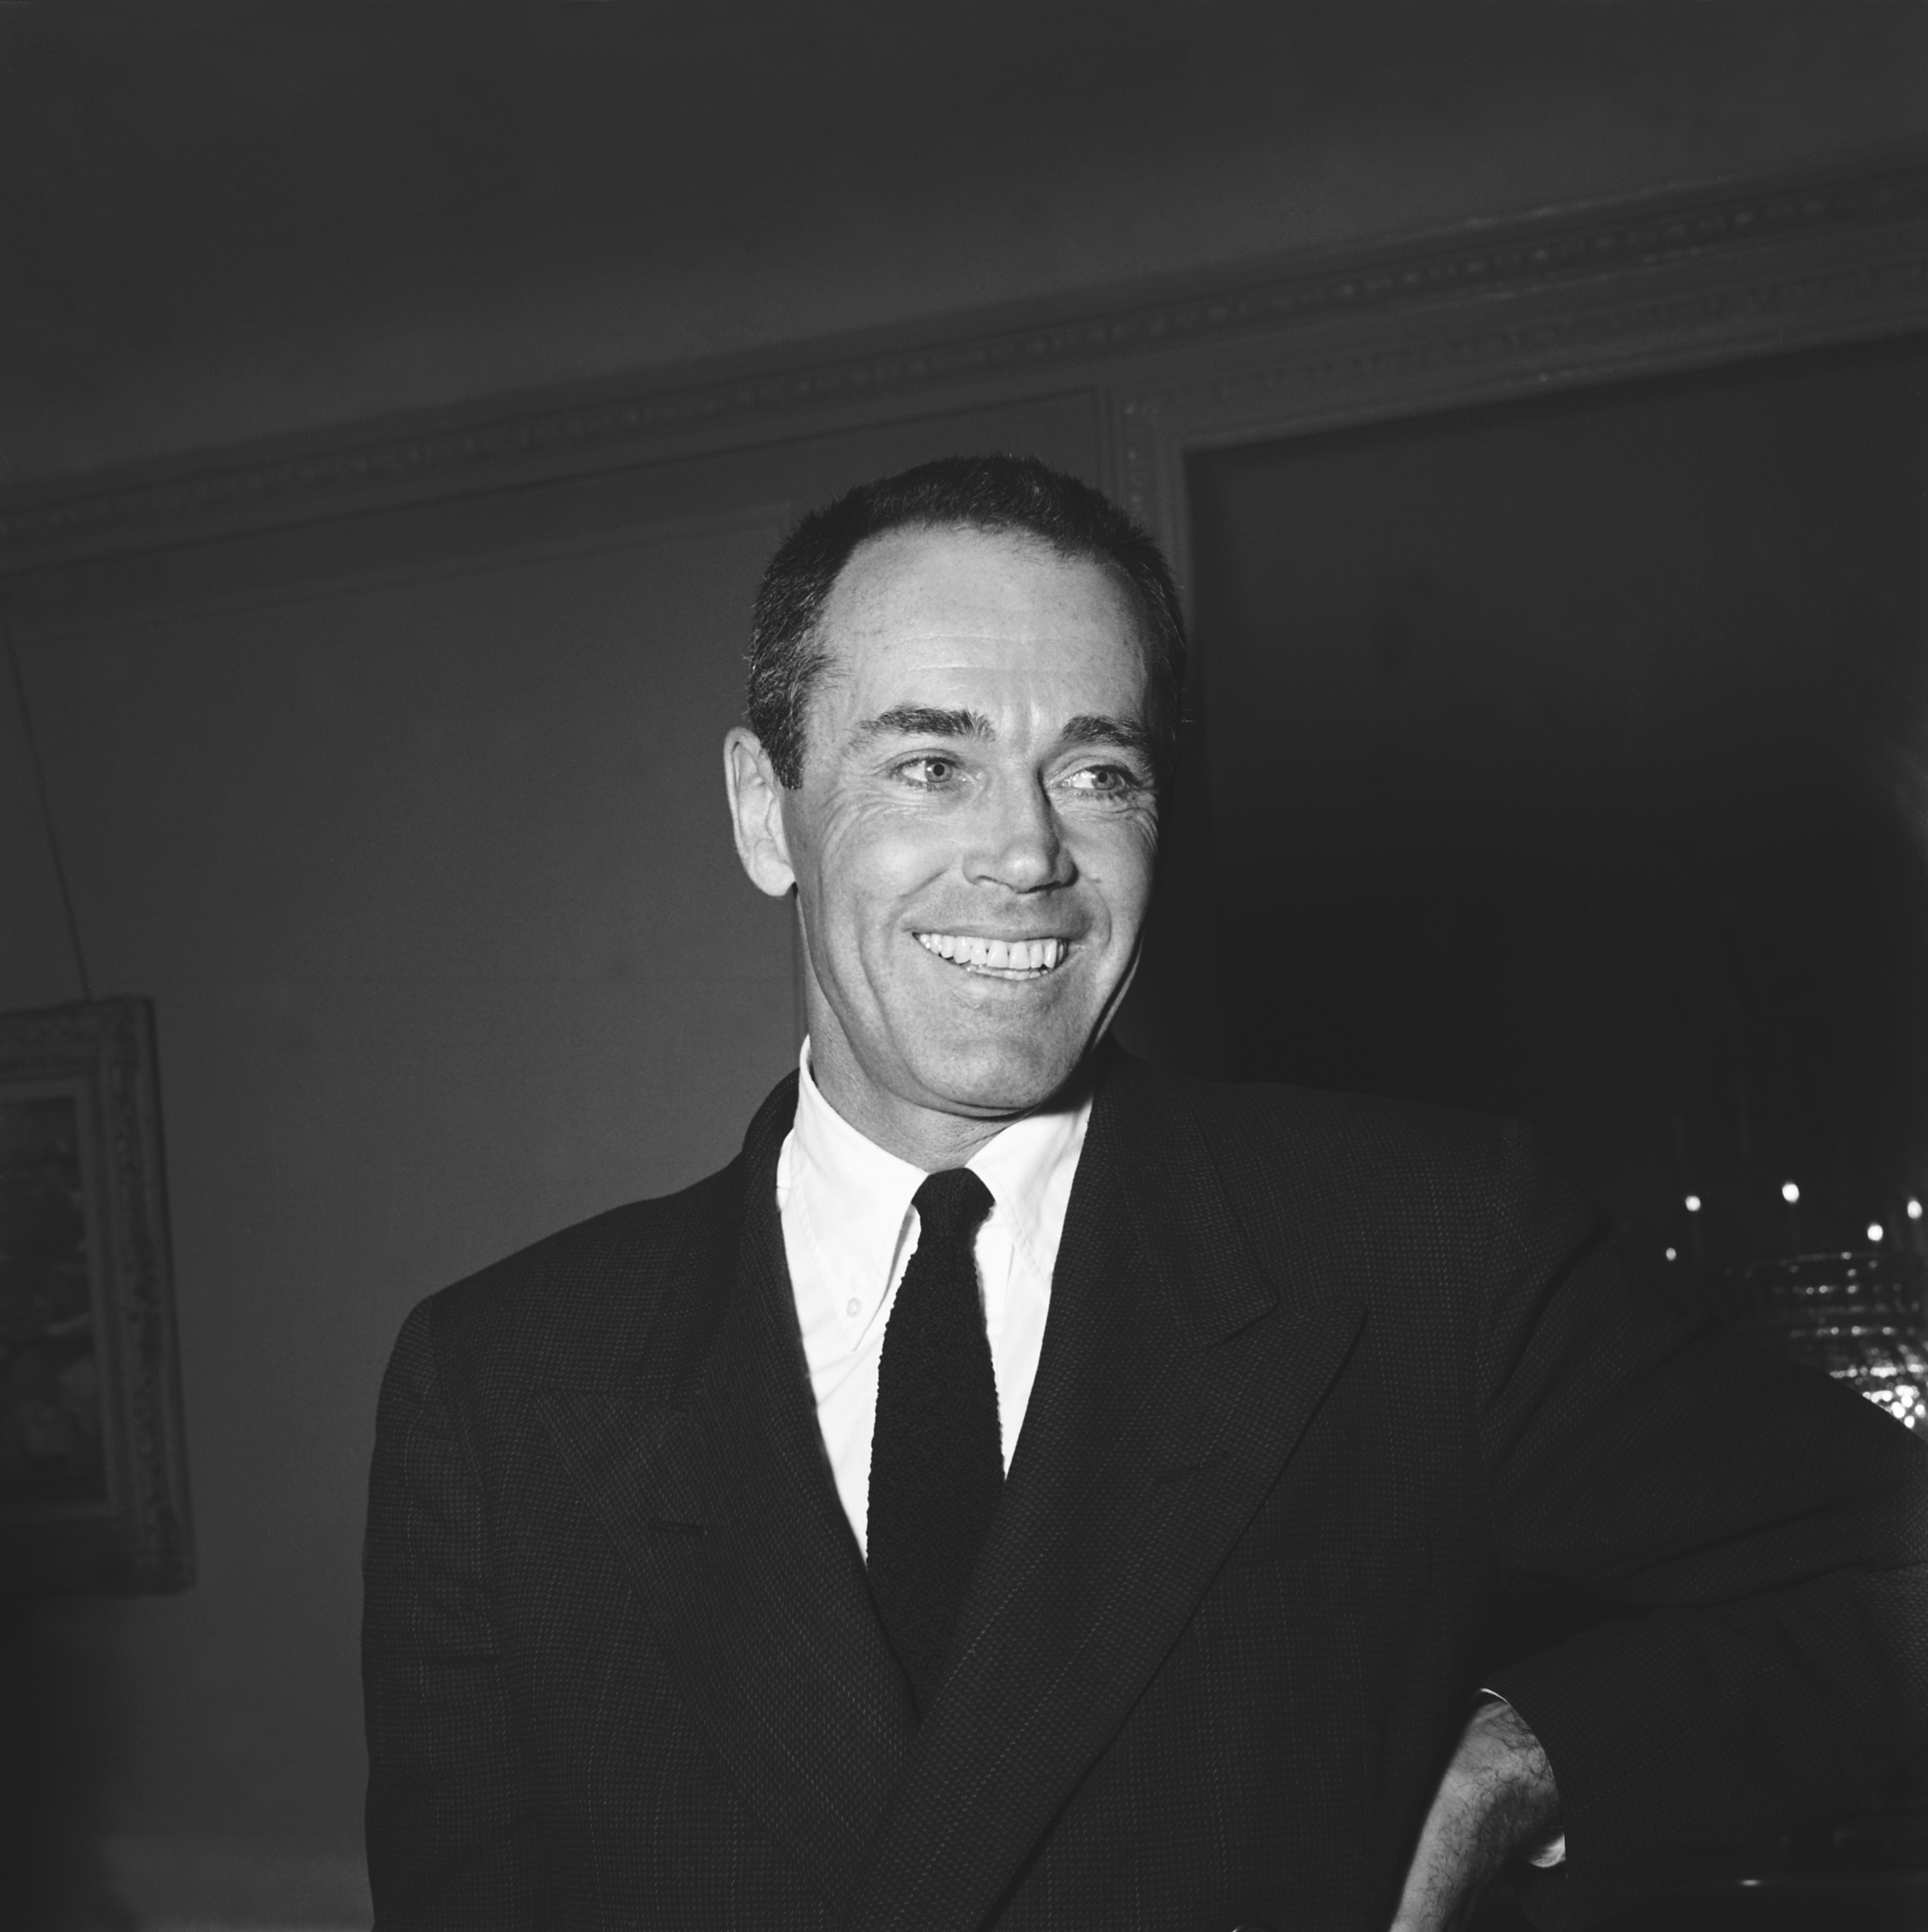 A portrait of actor Henry Fonda